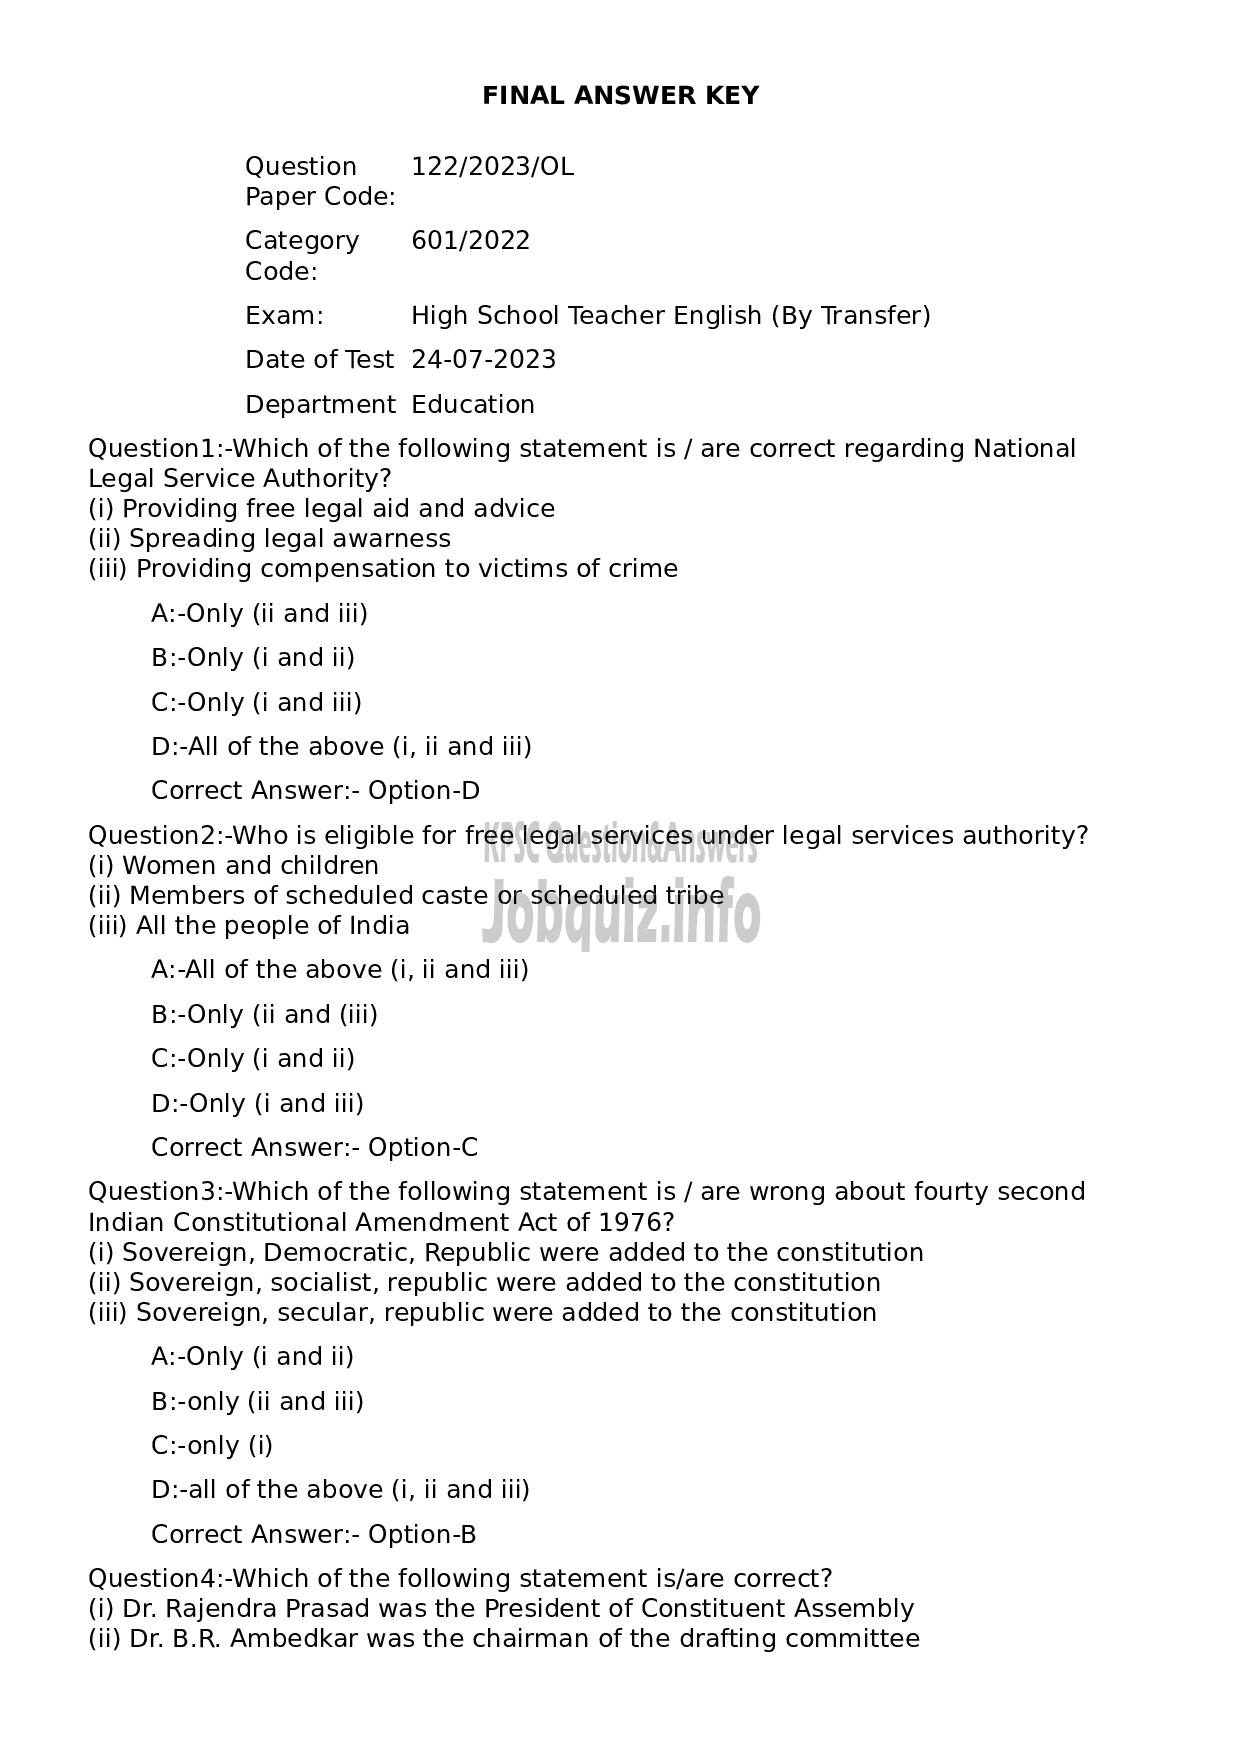 Kerala PSC Question Paper - High School Teacher English (By Transfer)-1